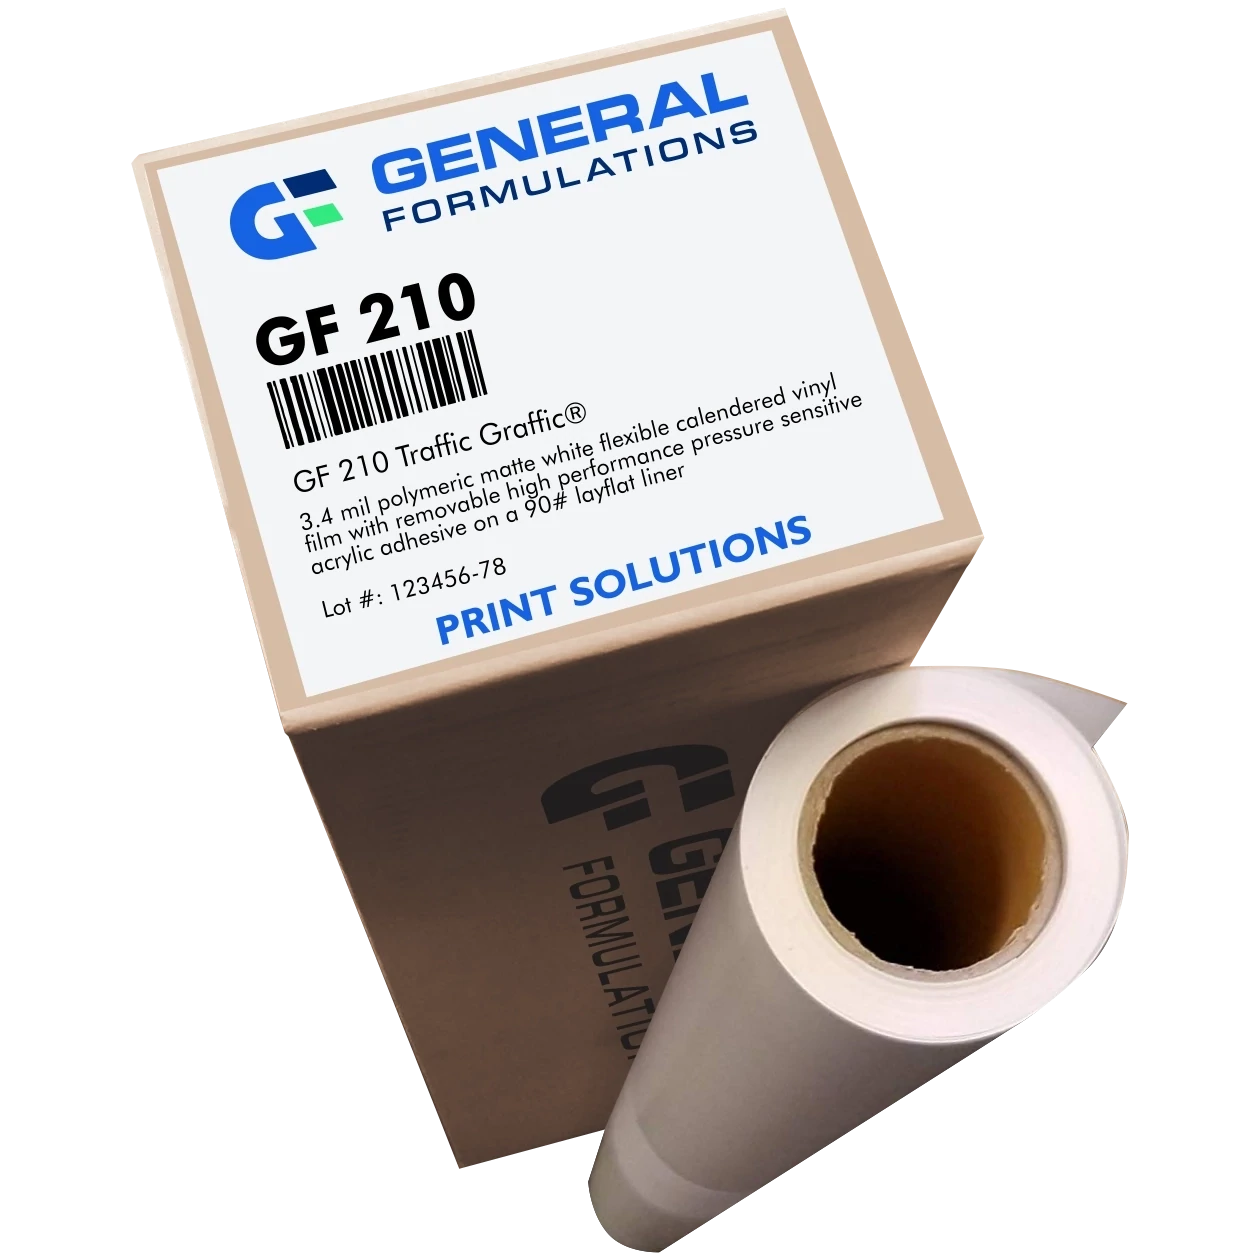 General Formulations 210 Traffic Graffic® Matte White Vinyl - High-Tack Removable